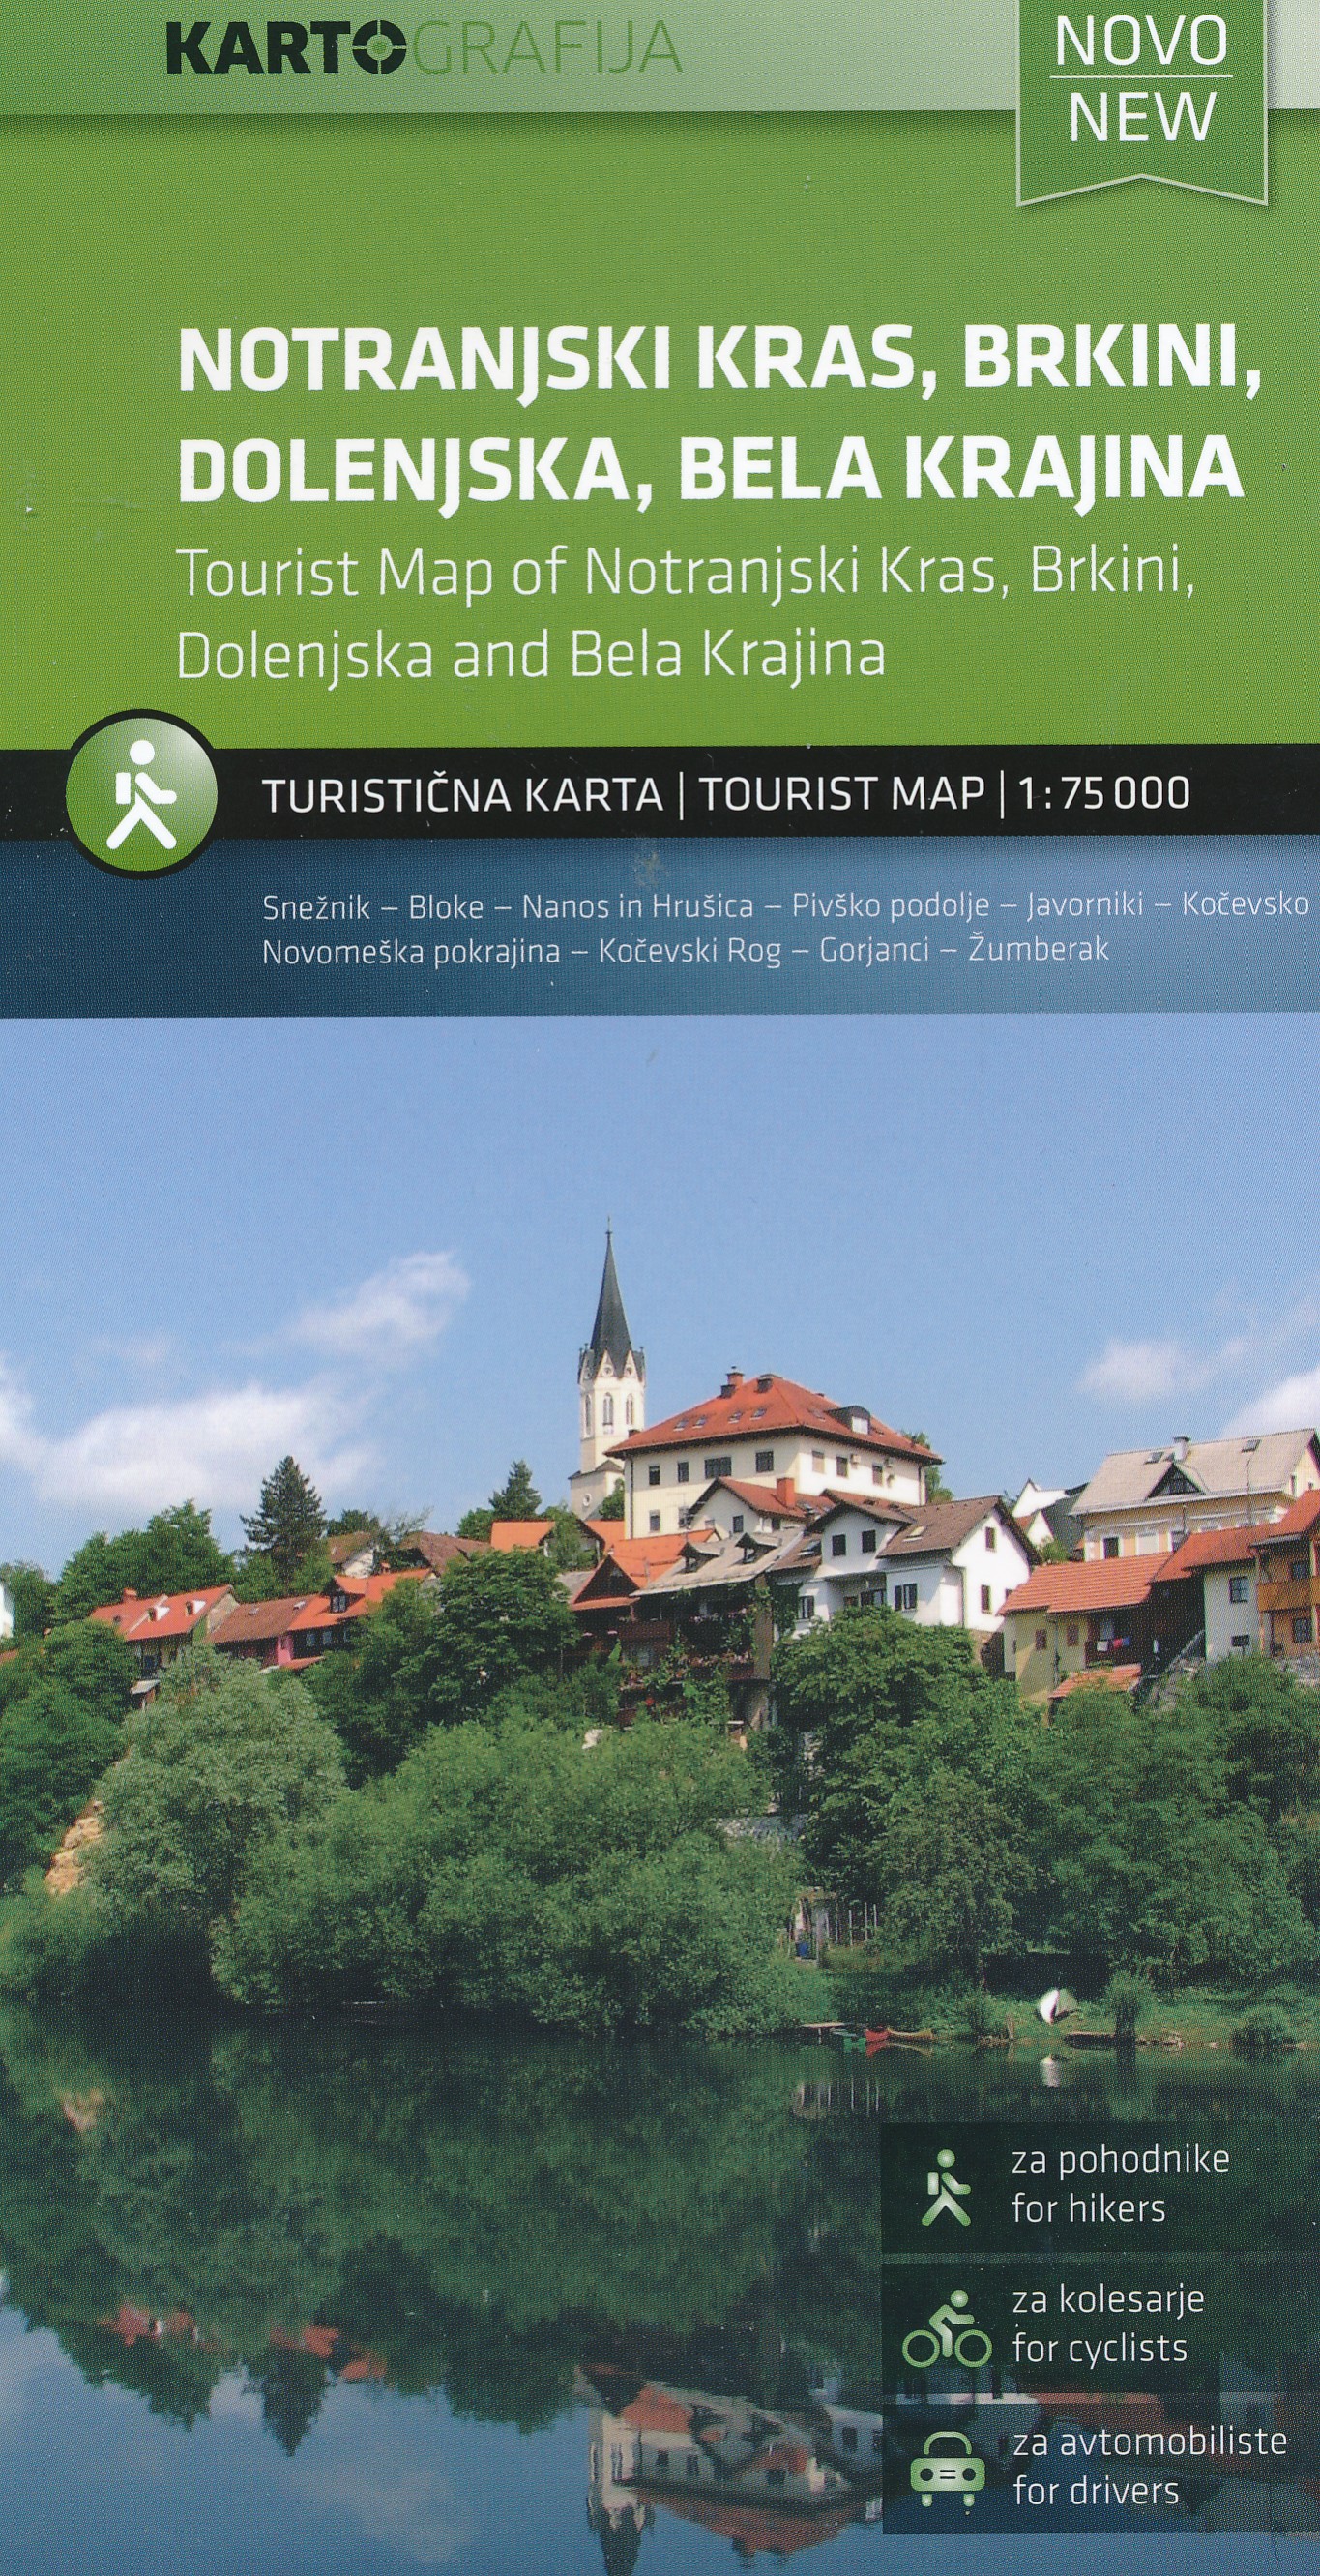 Online bestellen: Fietskaart - Wegenkaart - landkaart Notranjski kras, Brkini, Dolenjska, Bela krajina - Slovenie | Kartografija